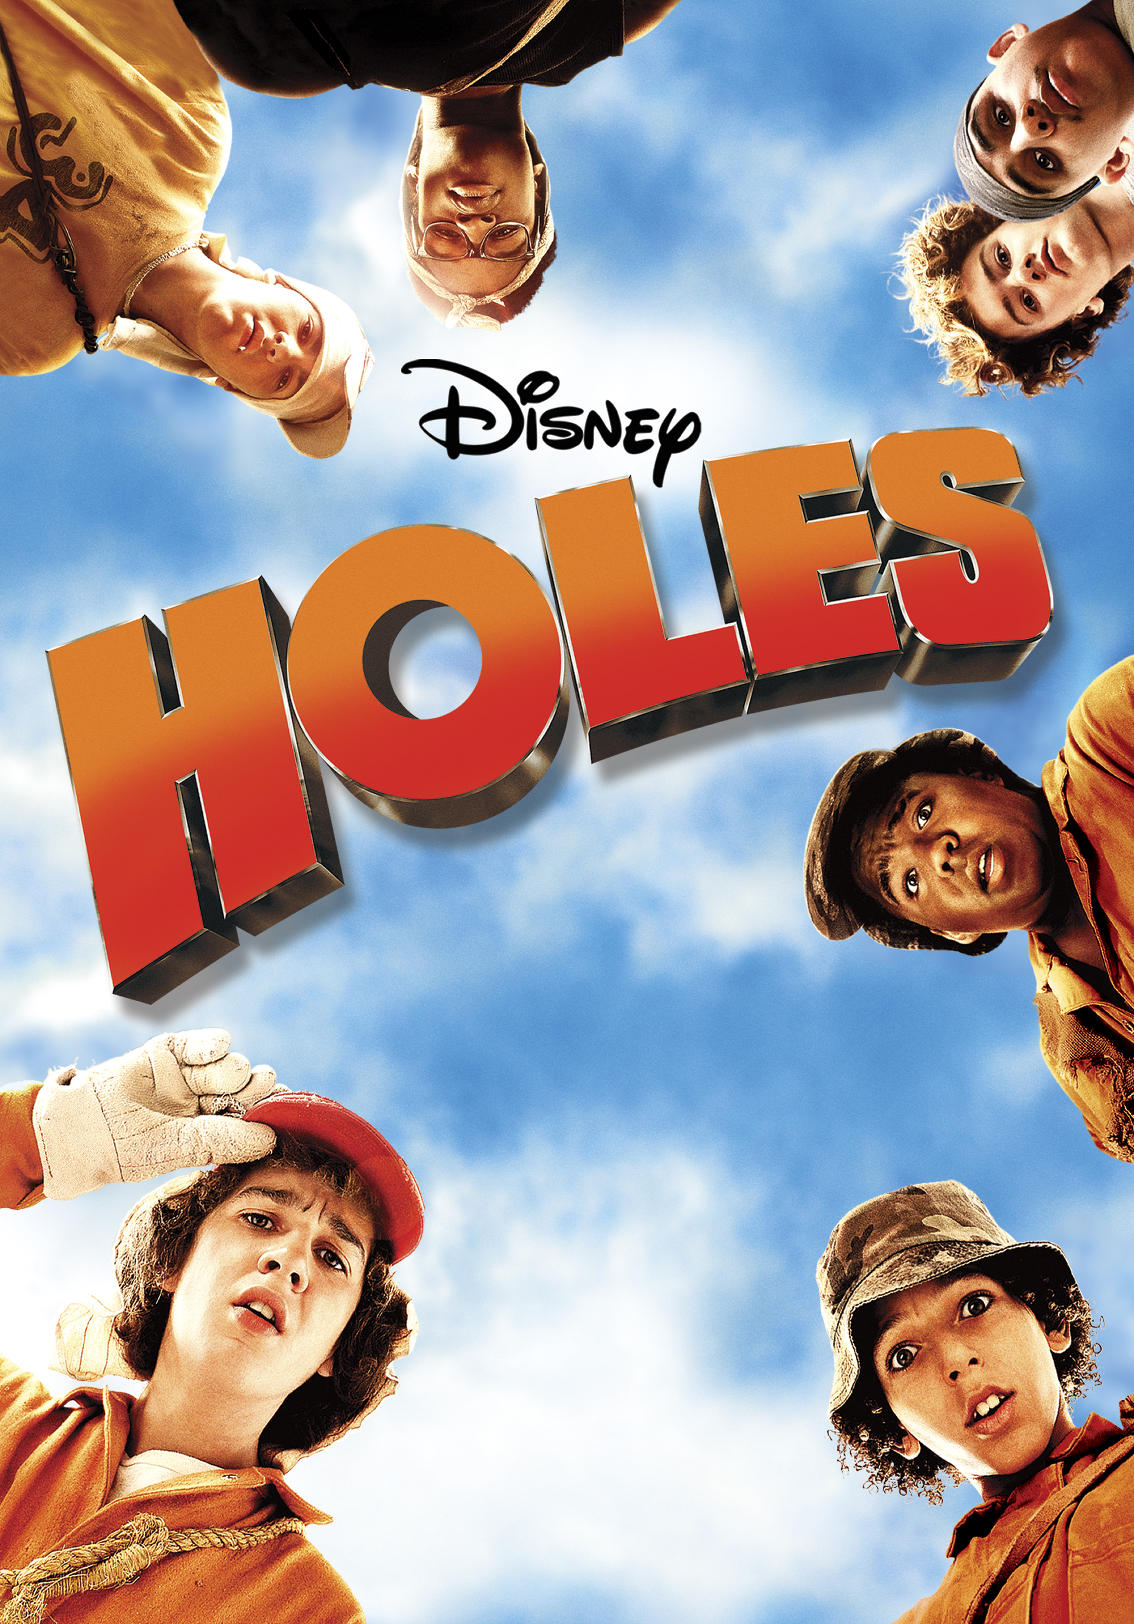 holes movie review for parents